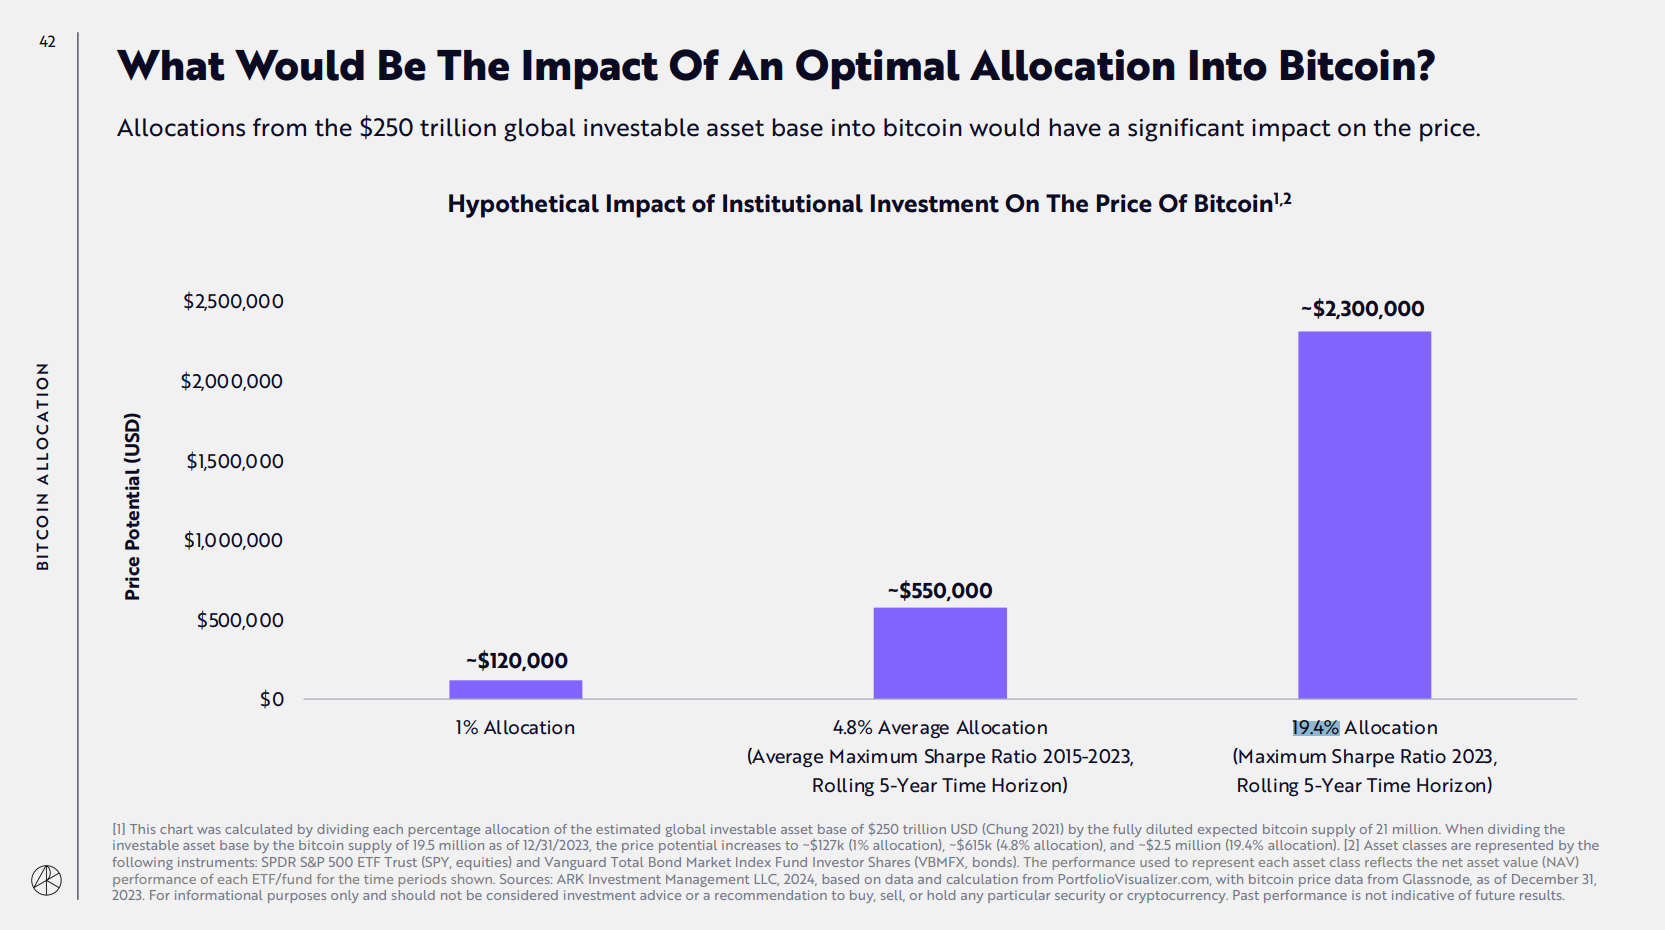 Ark Invest報告：2023年投資組合中比特幣的最適配置比例為19.4%，而2015年僅0.5%